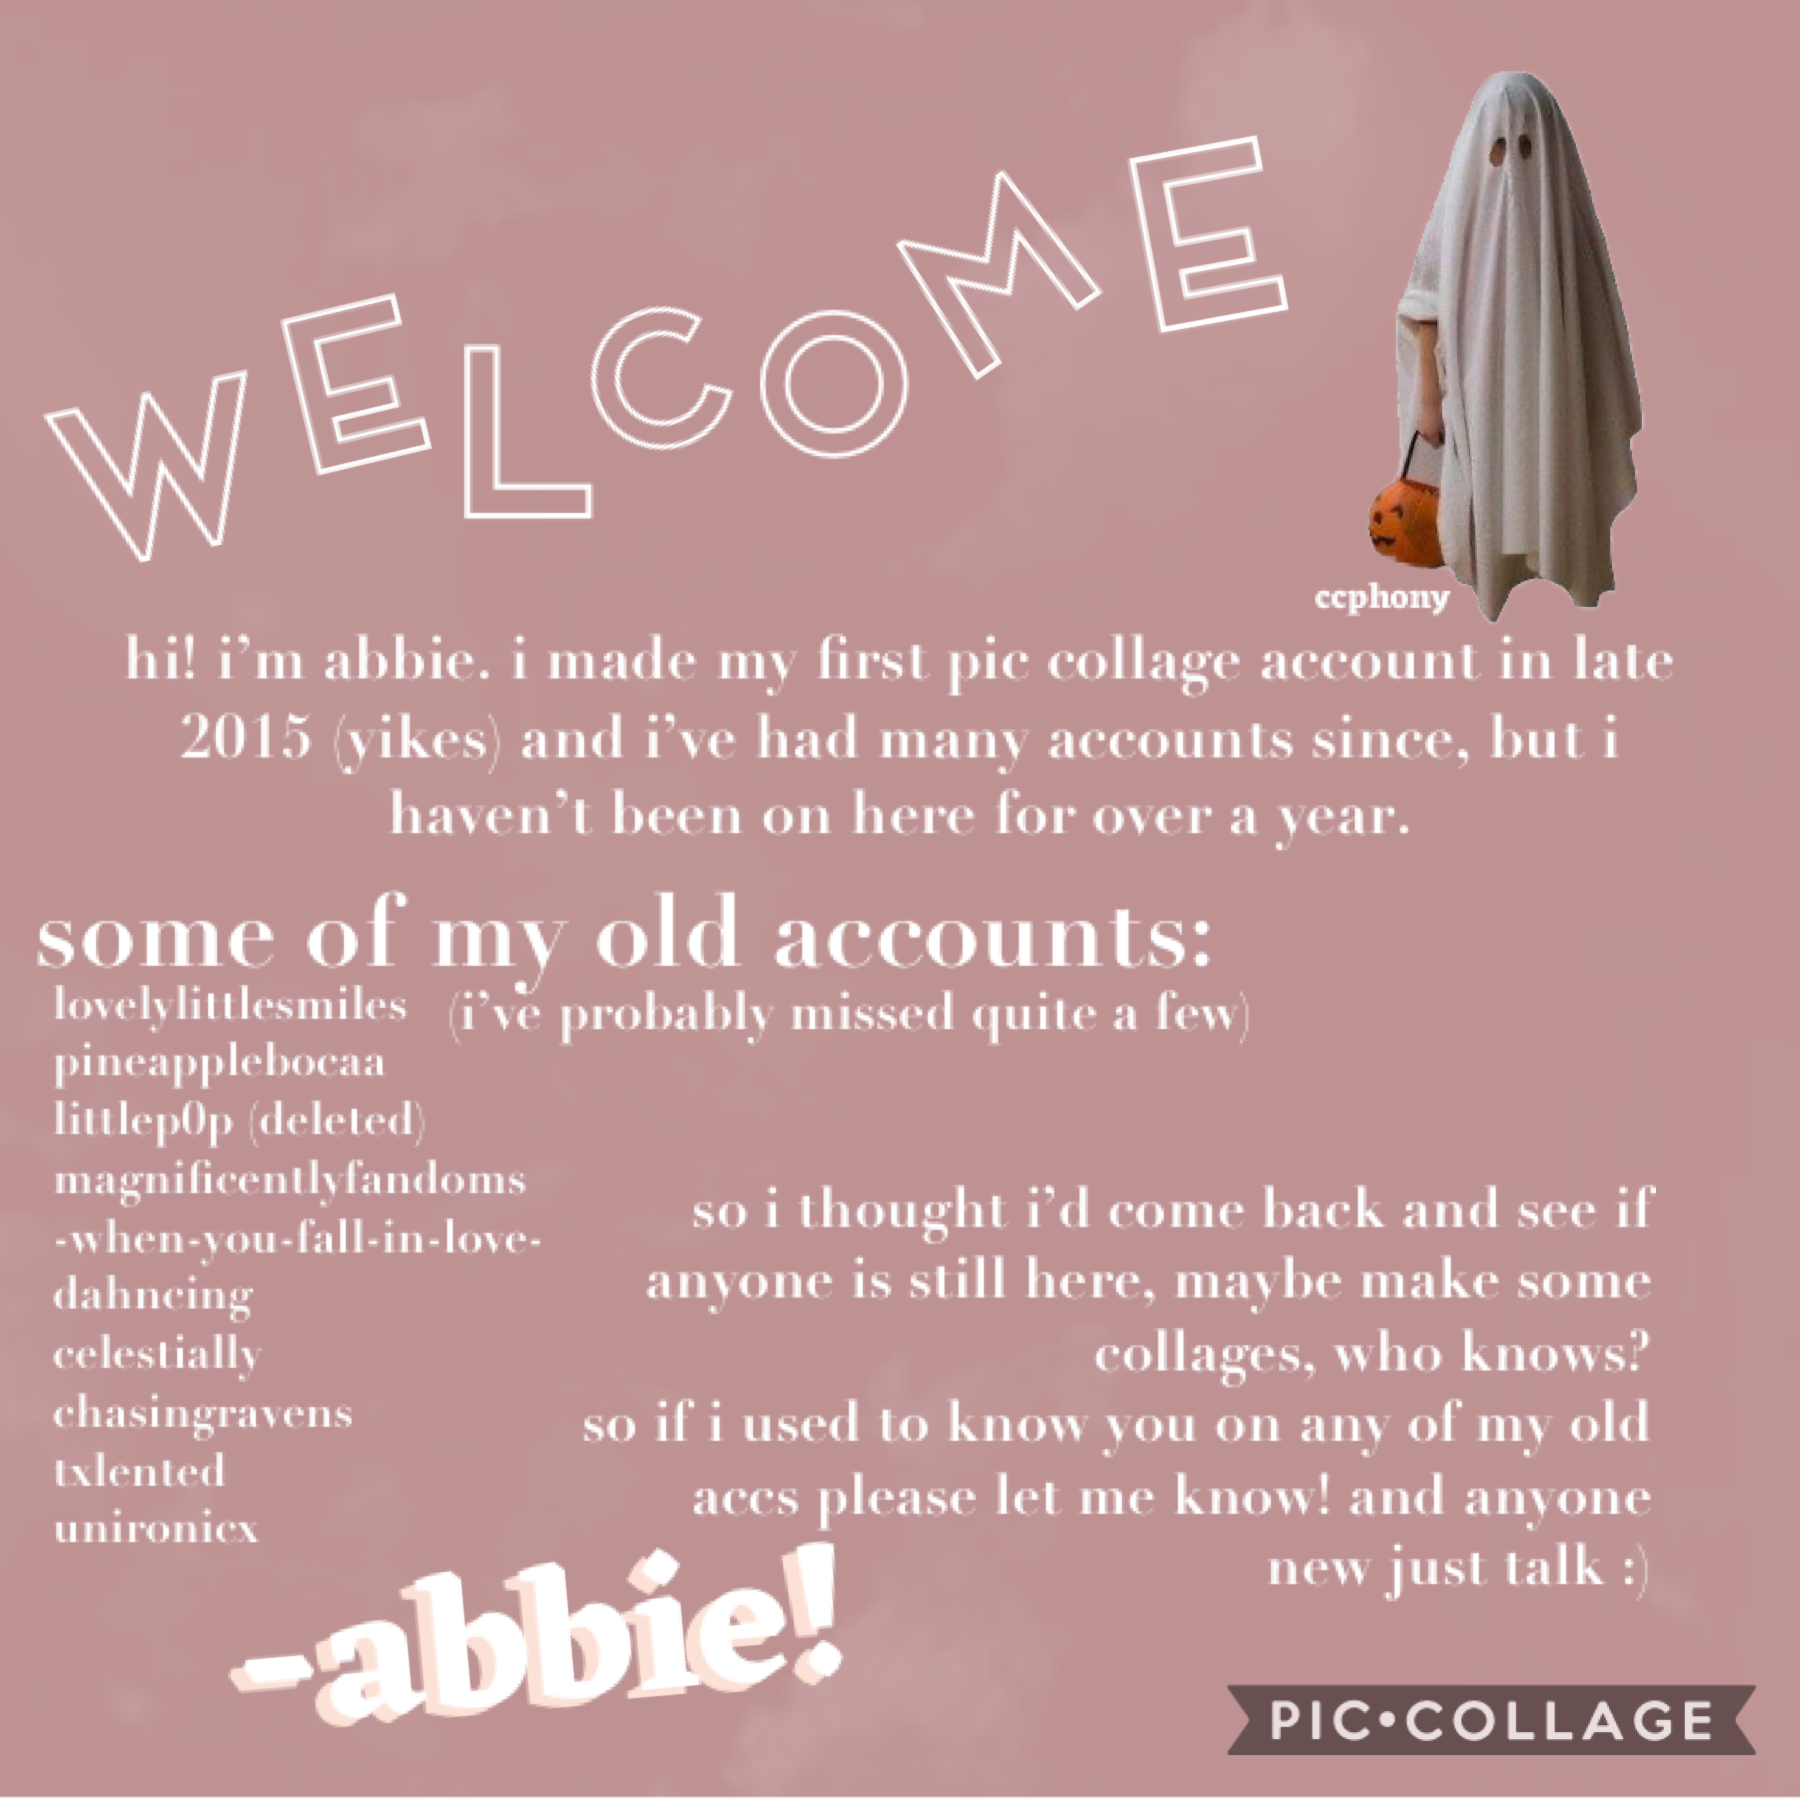 welcome, welcome! 
hi i guess :)
—
💫29/11/2020